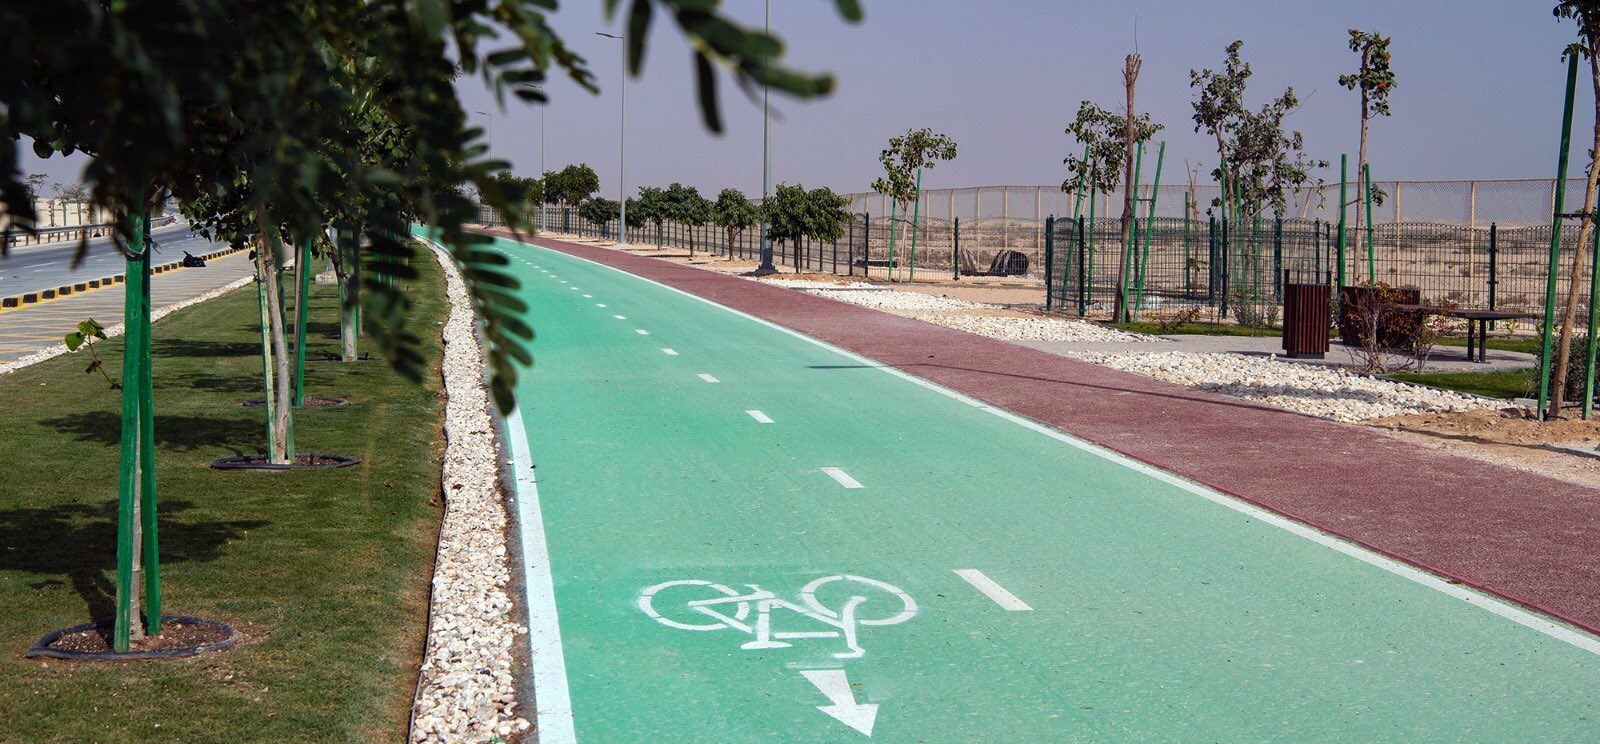 Ashghal Opens 38km Long Shared Pedestrian Cycling Path on Al Khor Road